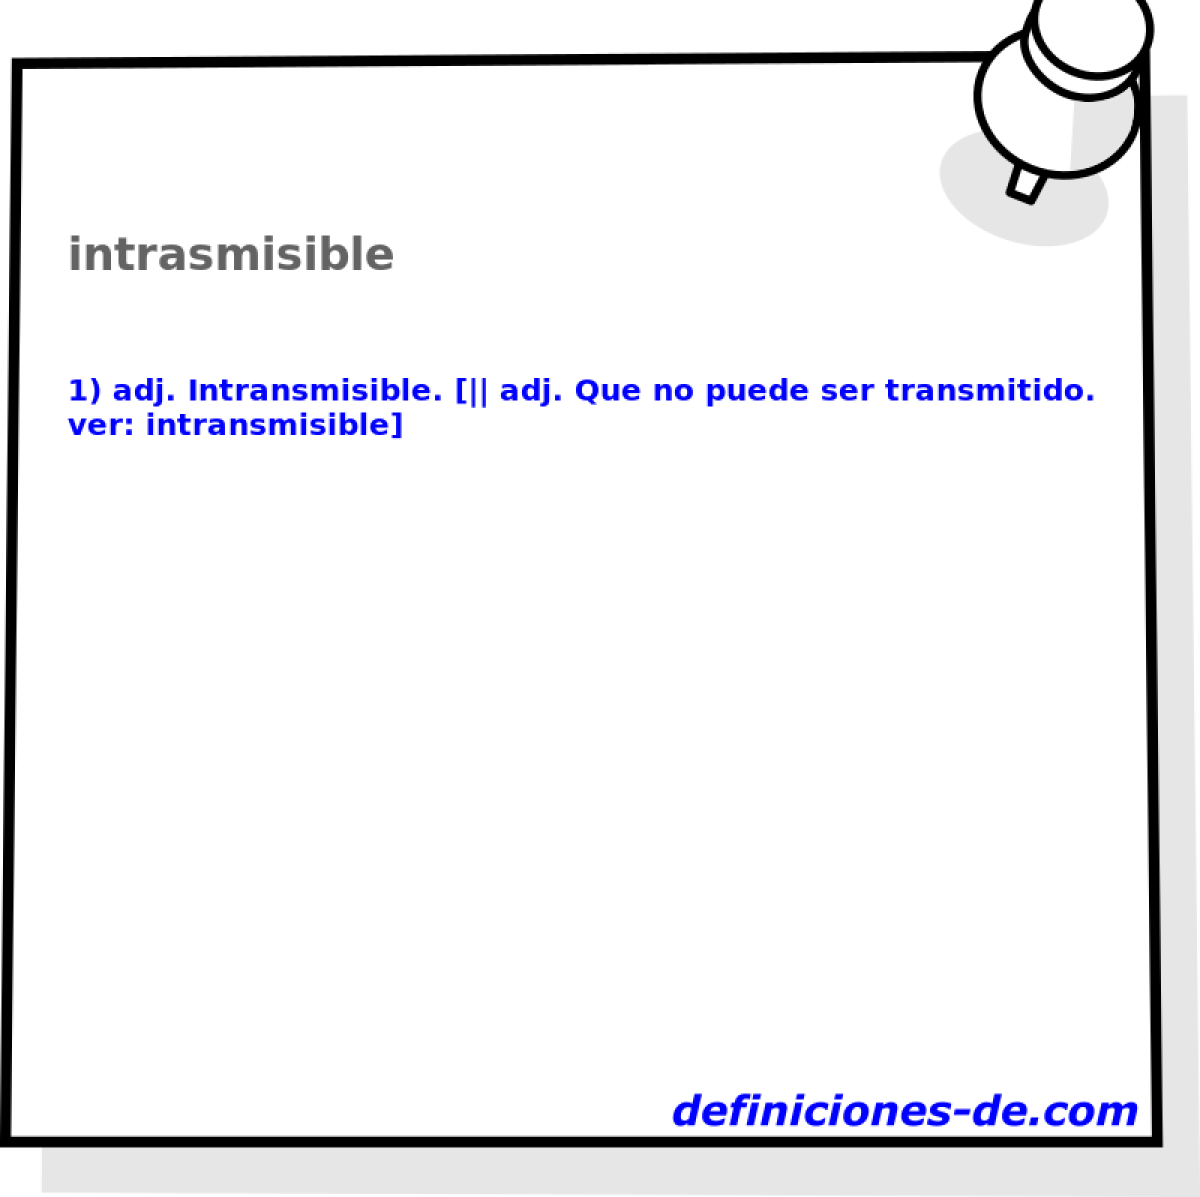 intrasmisible 